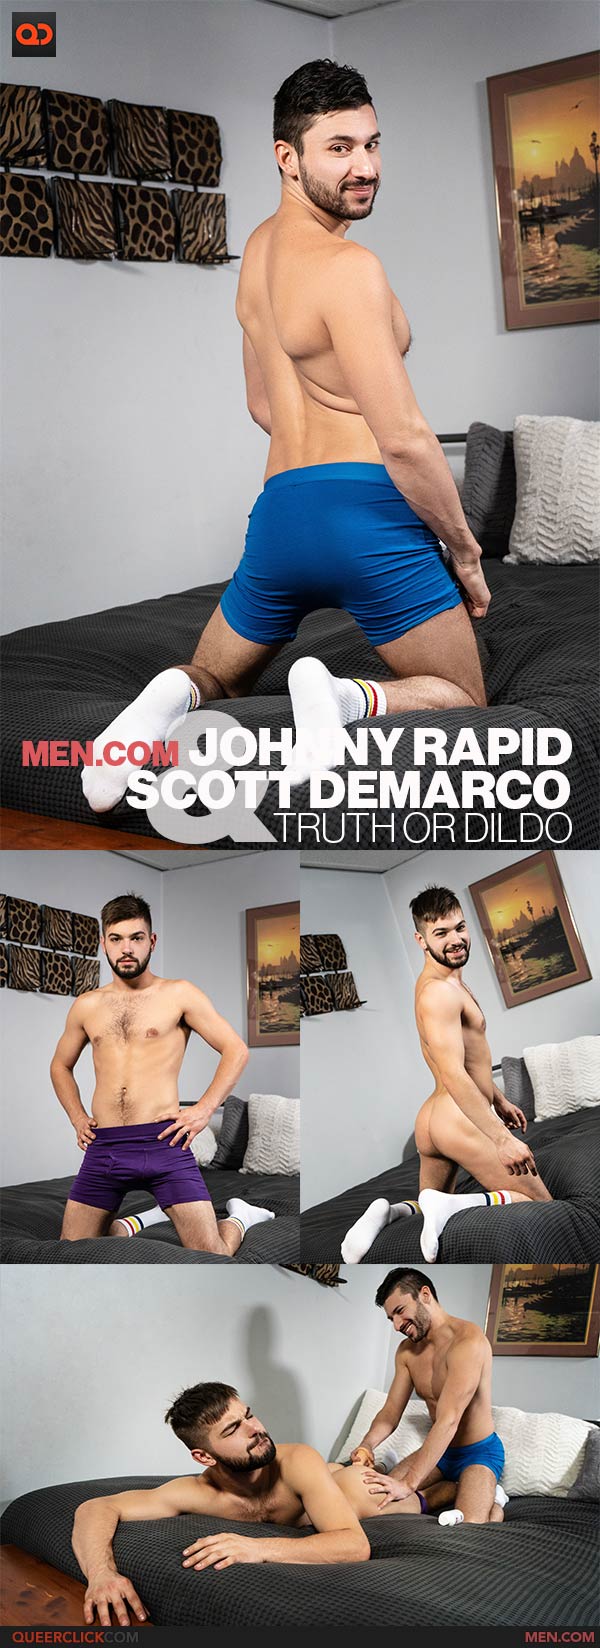 Men.com: Johnny Rapid and Scott DeMarco